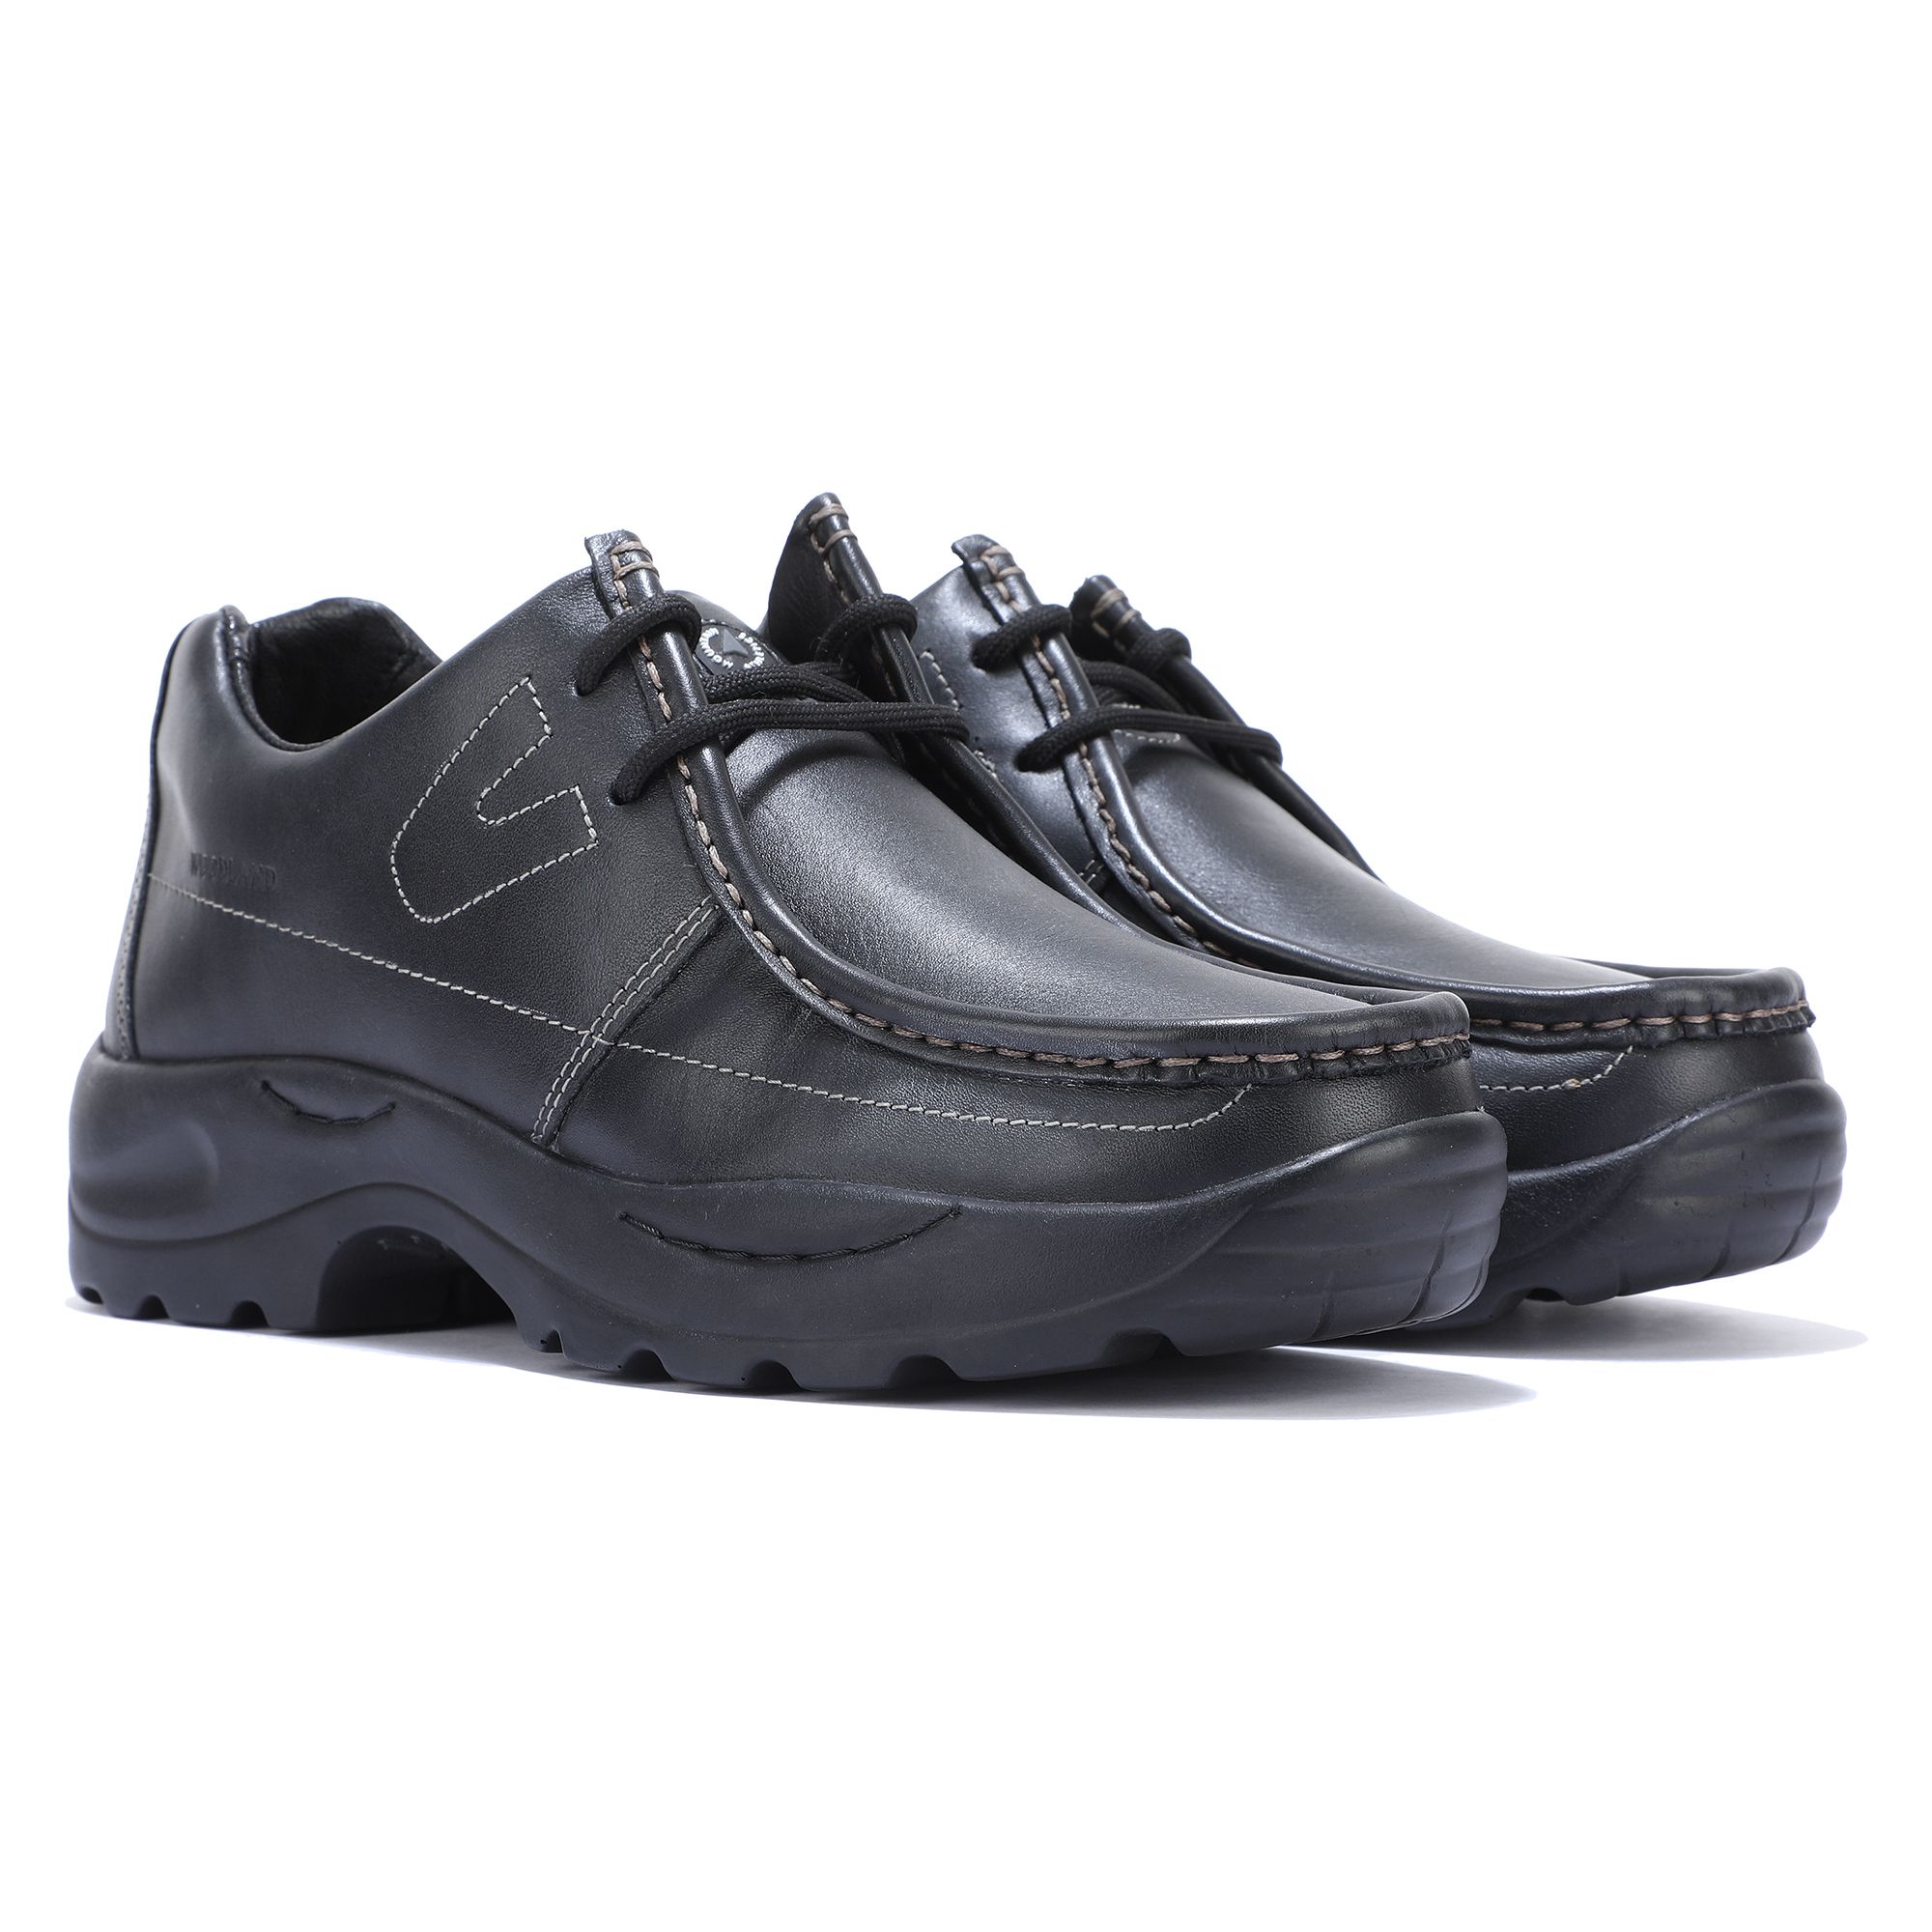 Buy Woodland Men's Black Leather Sneaker (GC 3585119) at Amazon.in